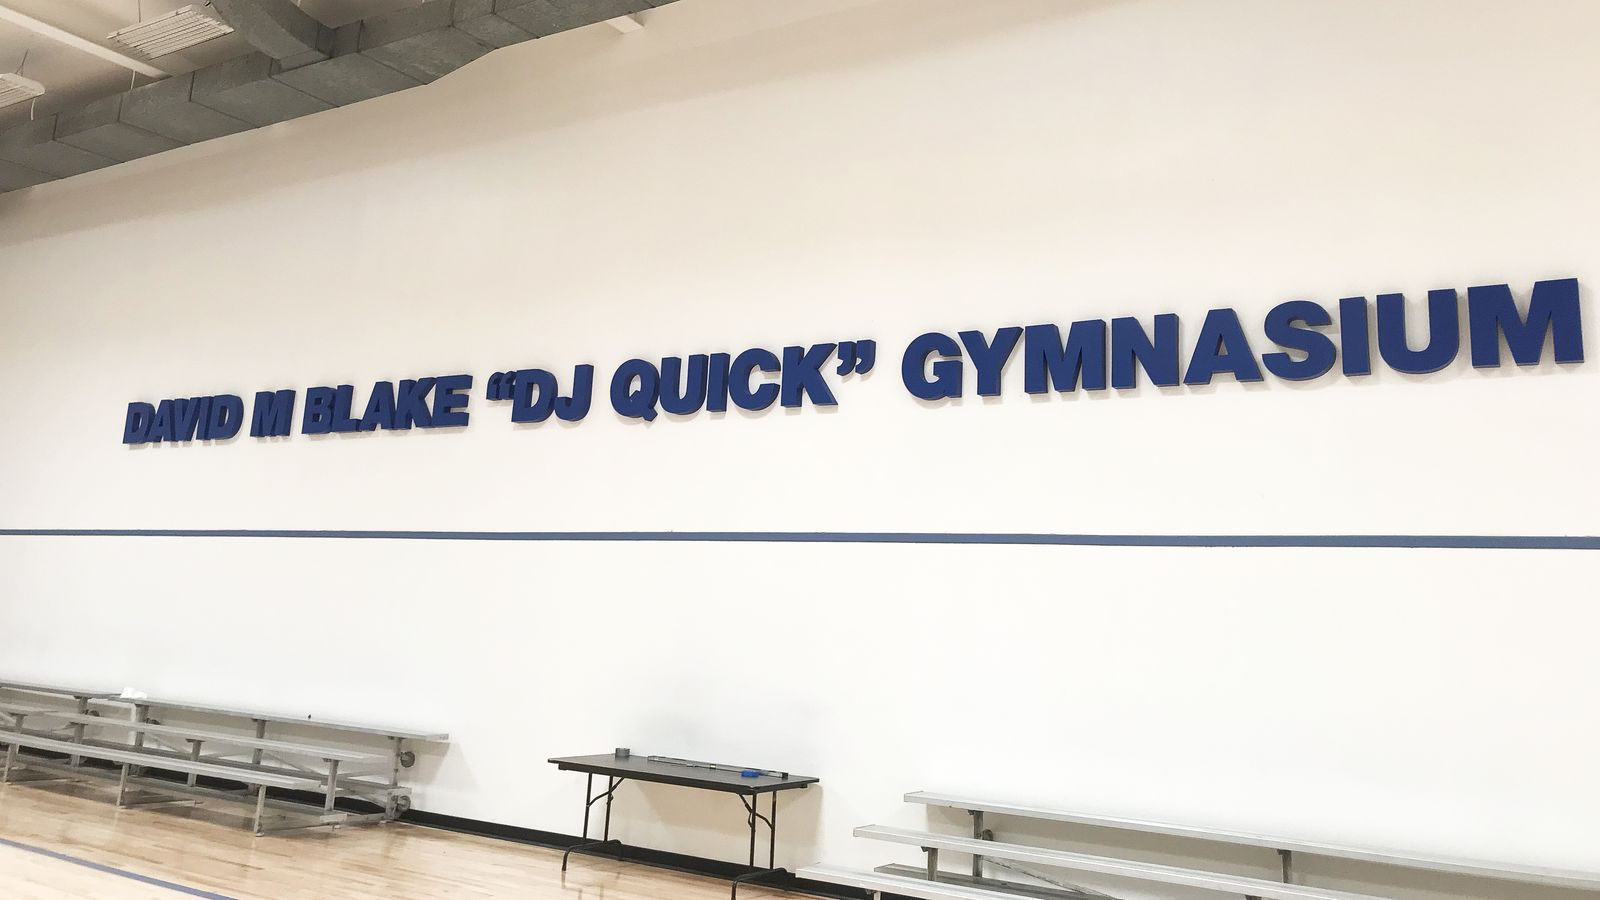 David M Blake Dj Quick Gymnasium 3d metal sign painted in dark blue made of aluminum